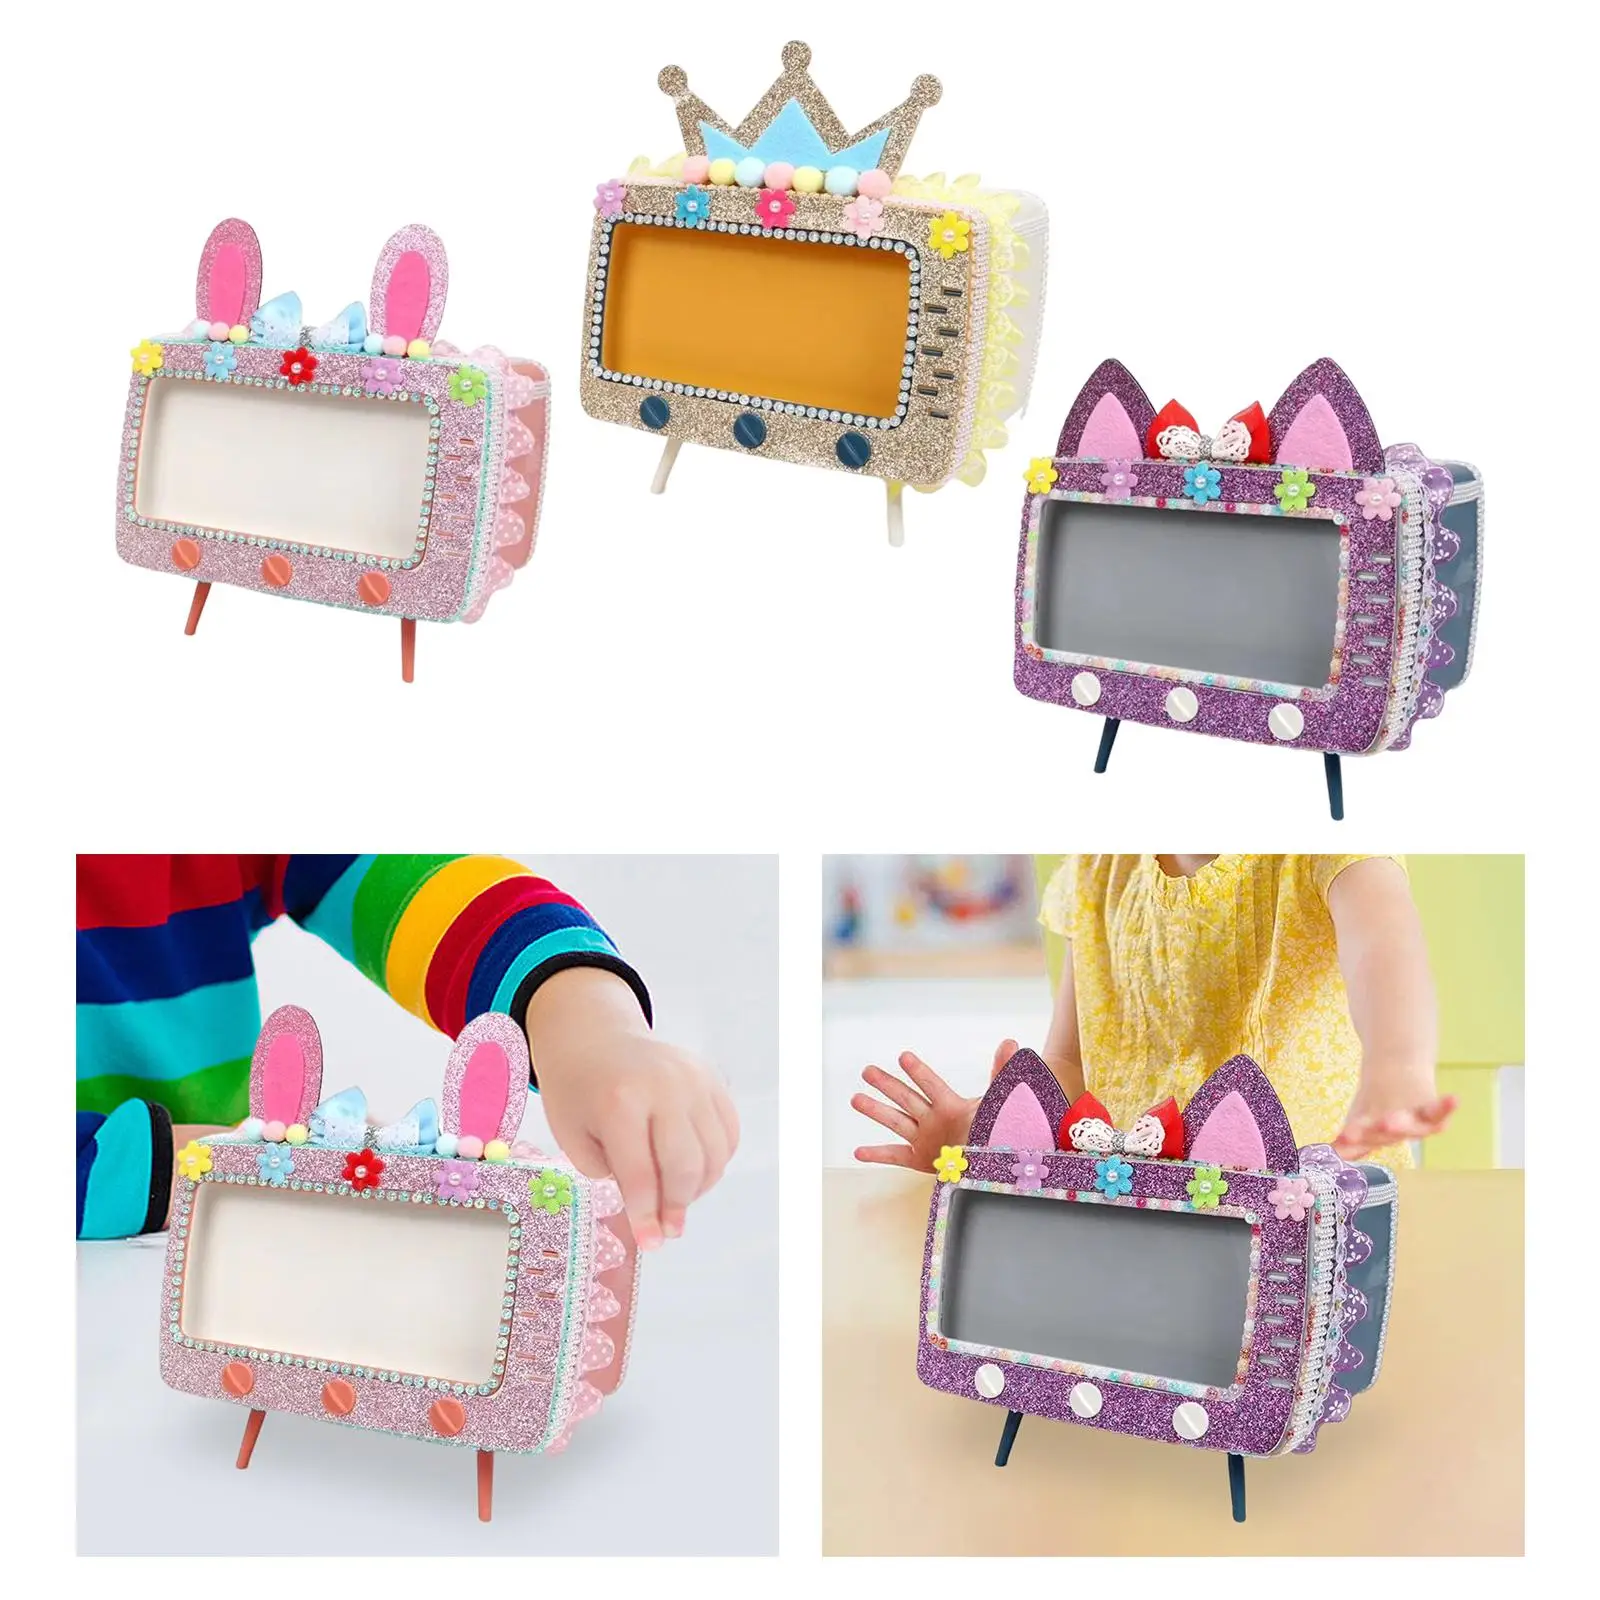 TV Shaped Tissue Box DIY Kit Creative Toy Package DIY Craft for Girls Kids